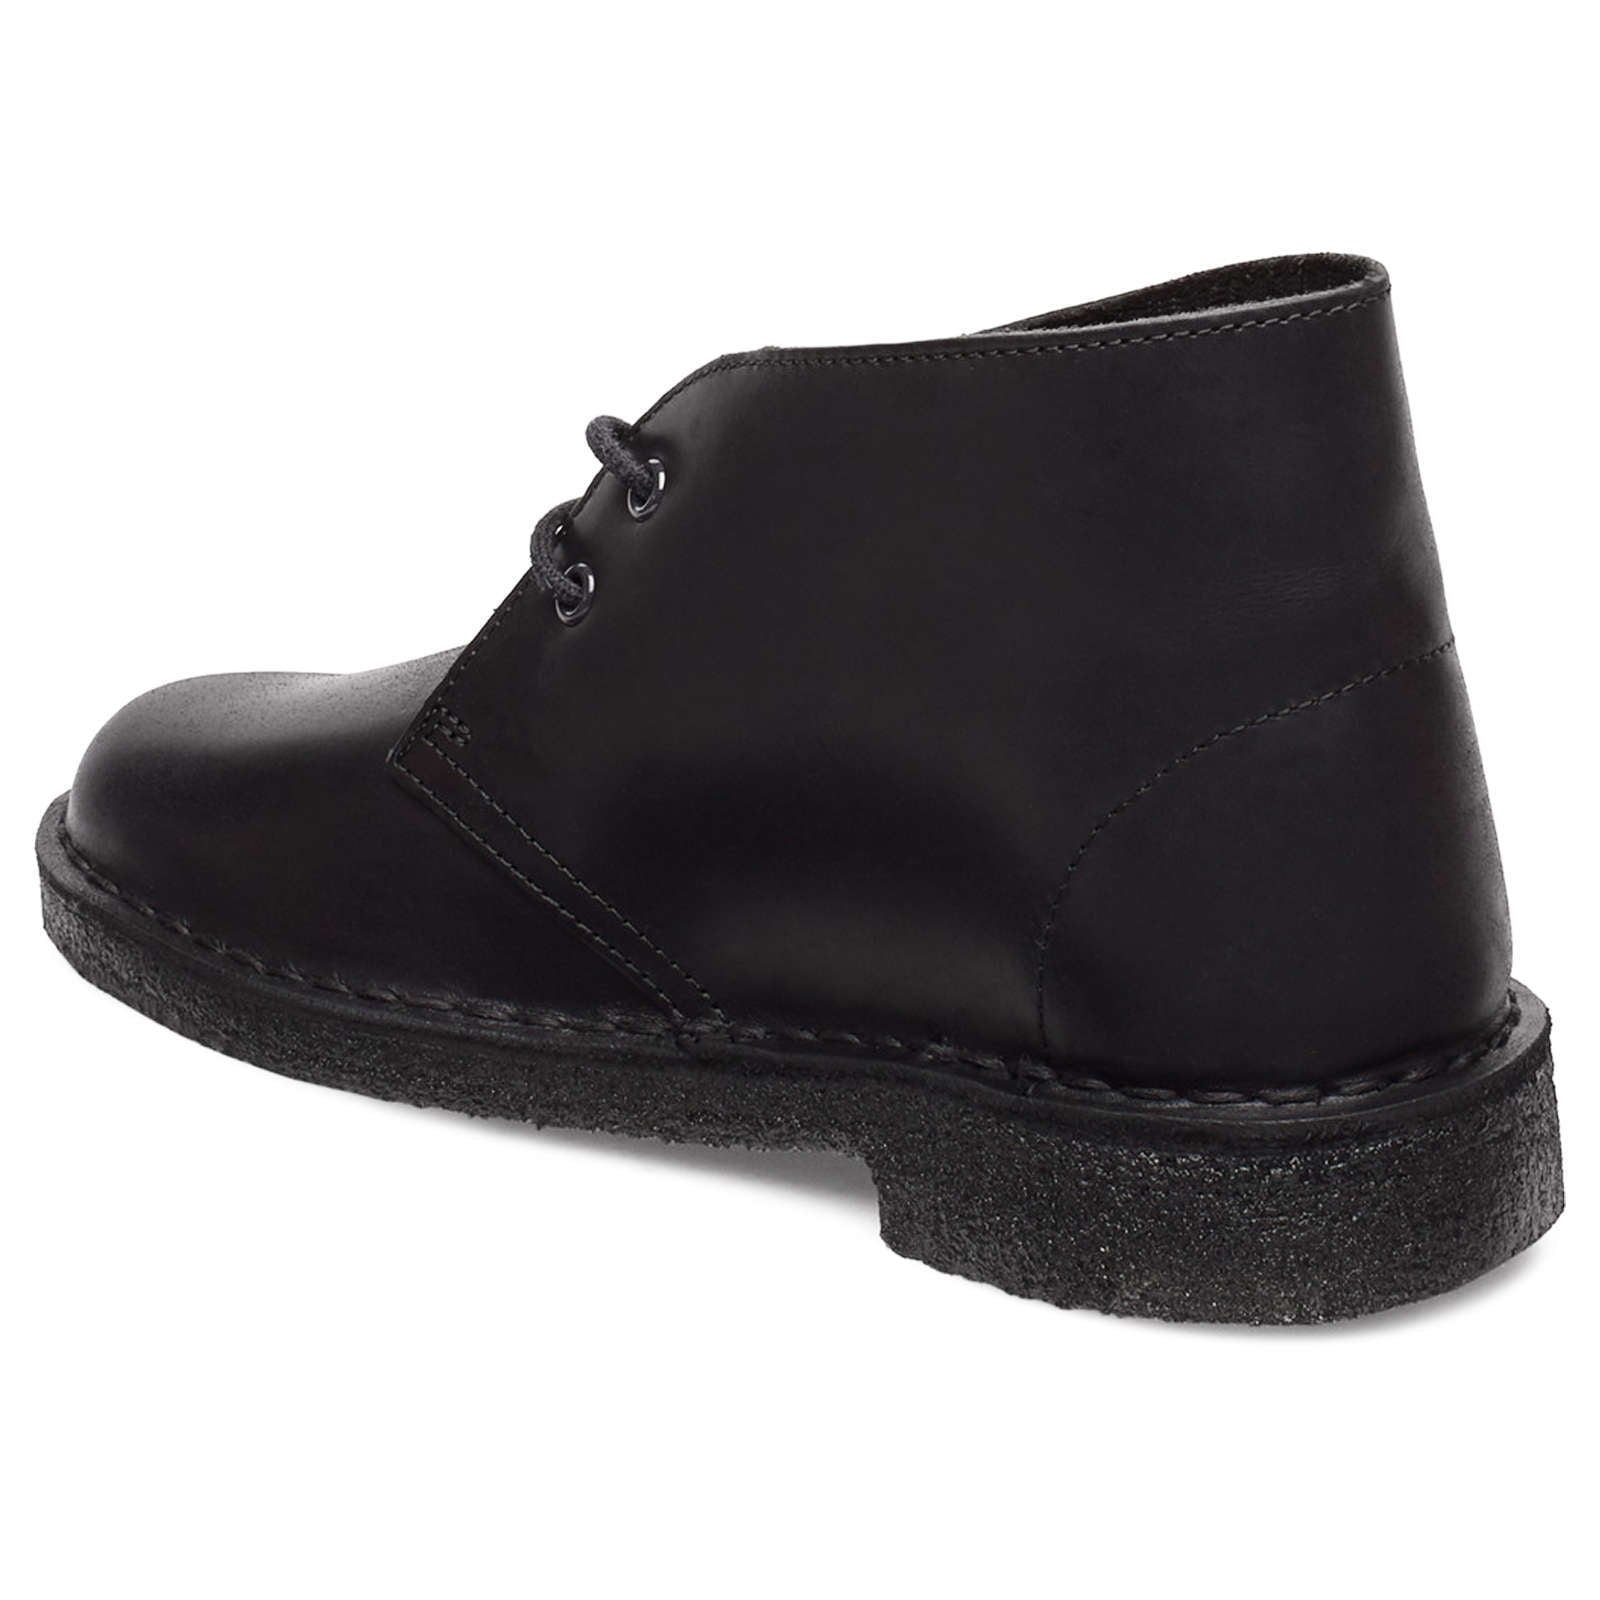 Clarks Originals Desert Boot Leather Women's Boots#color_black polished